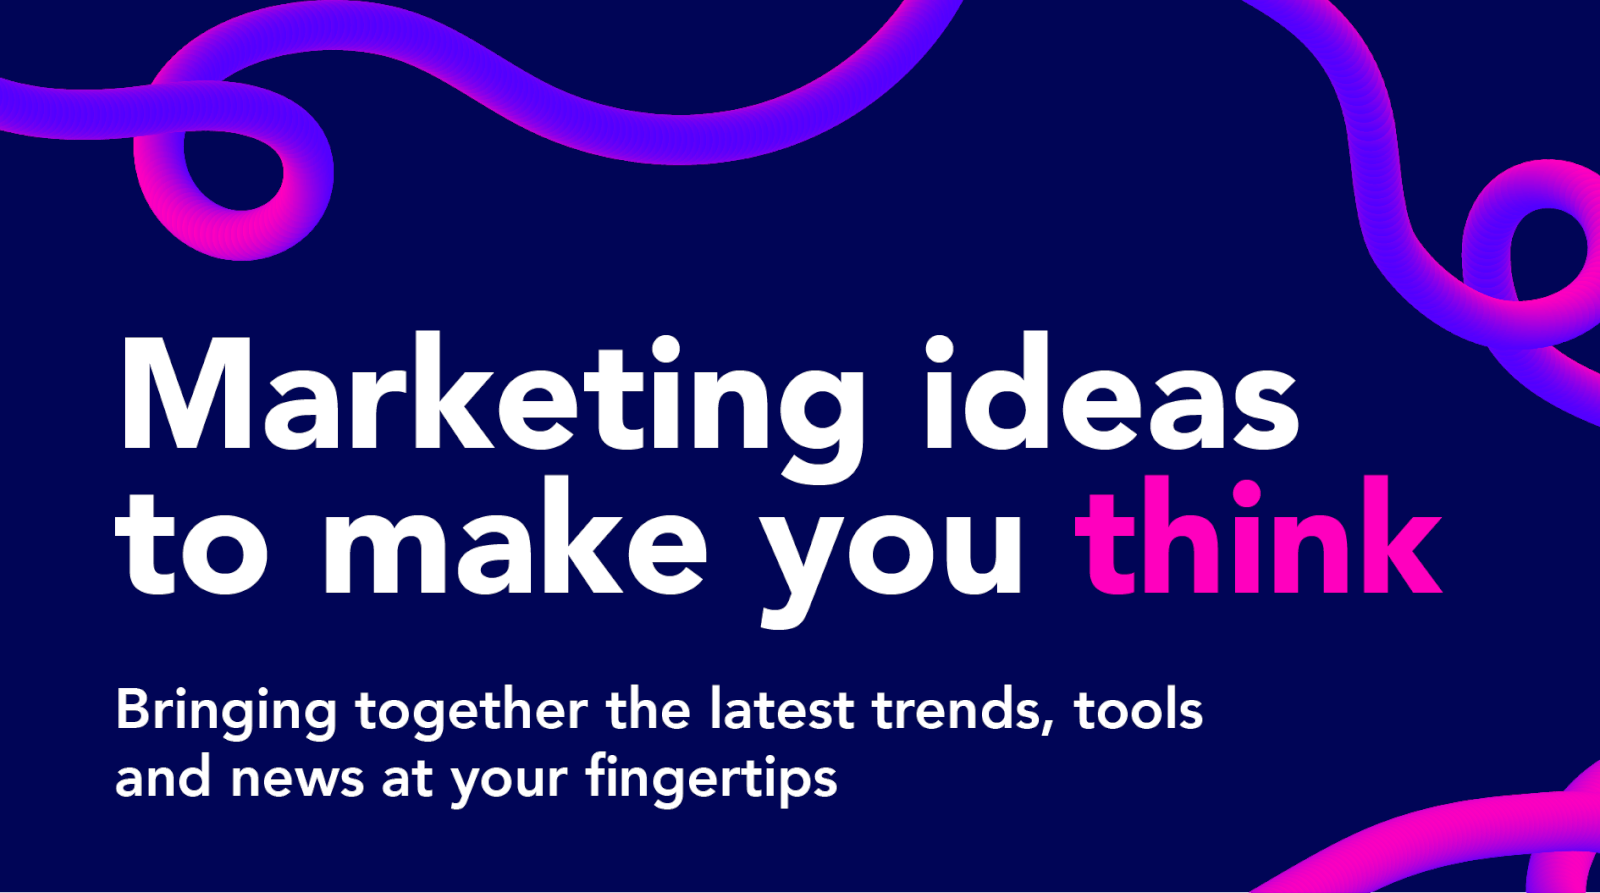 Marketing ideas to make you think